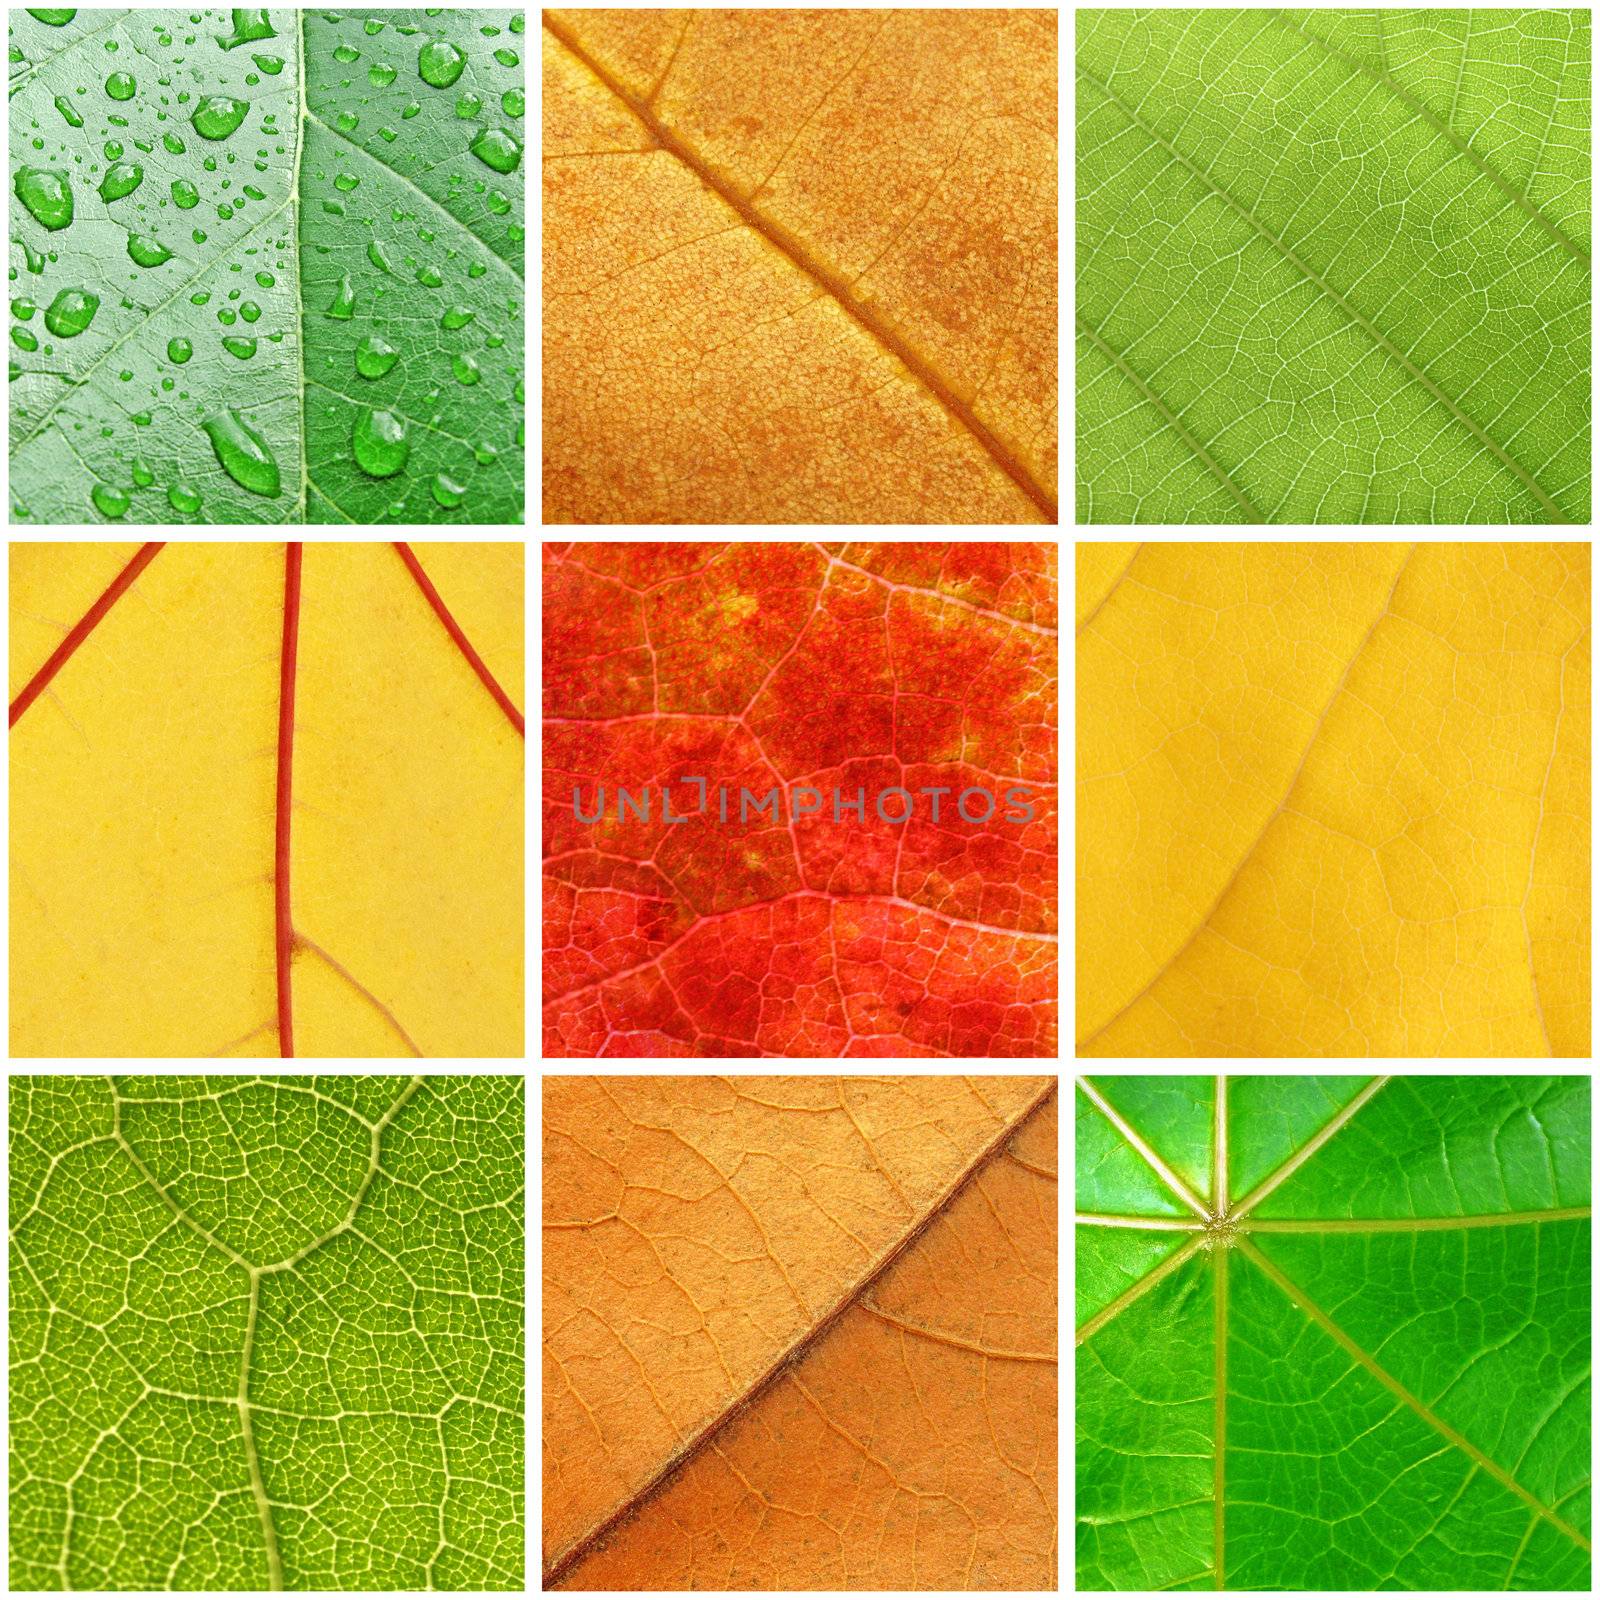 leaf textures by romantiche